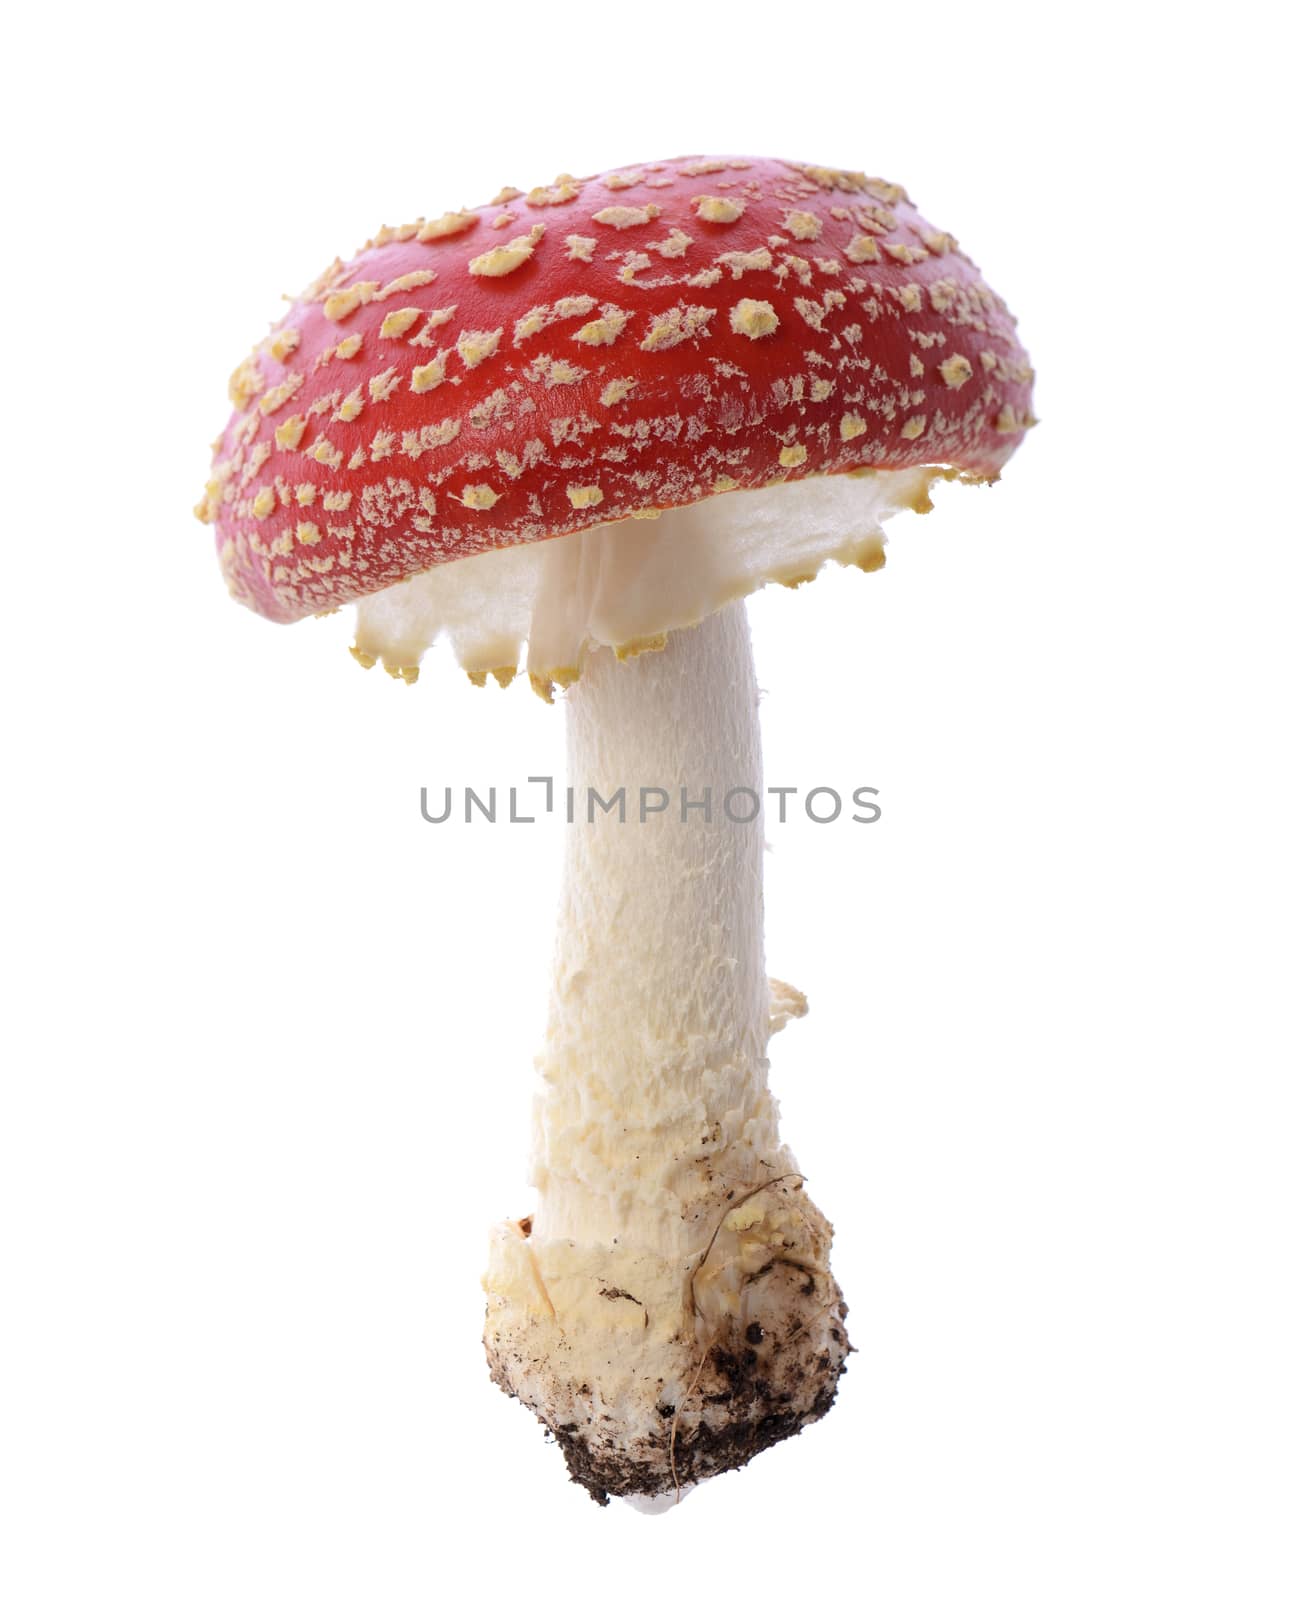 red poison mushroom toadstool close up studio shoot 